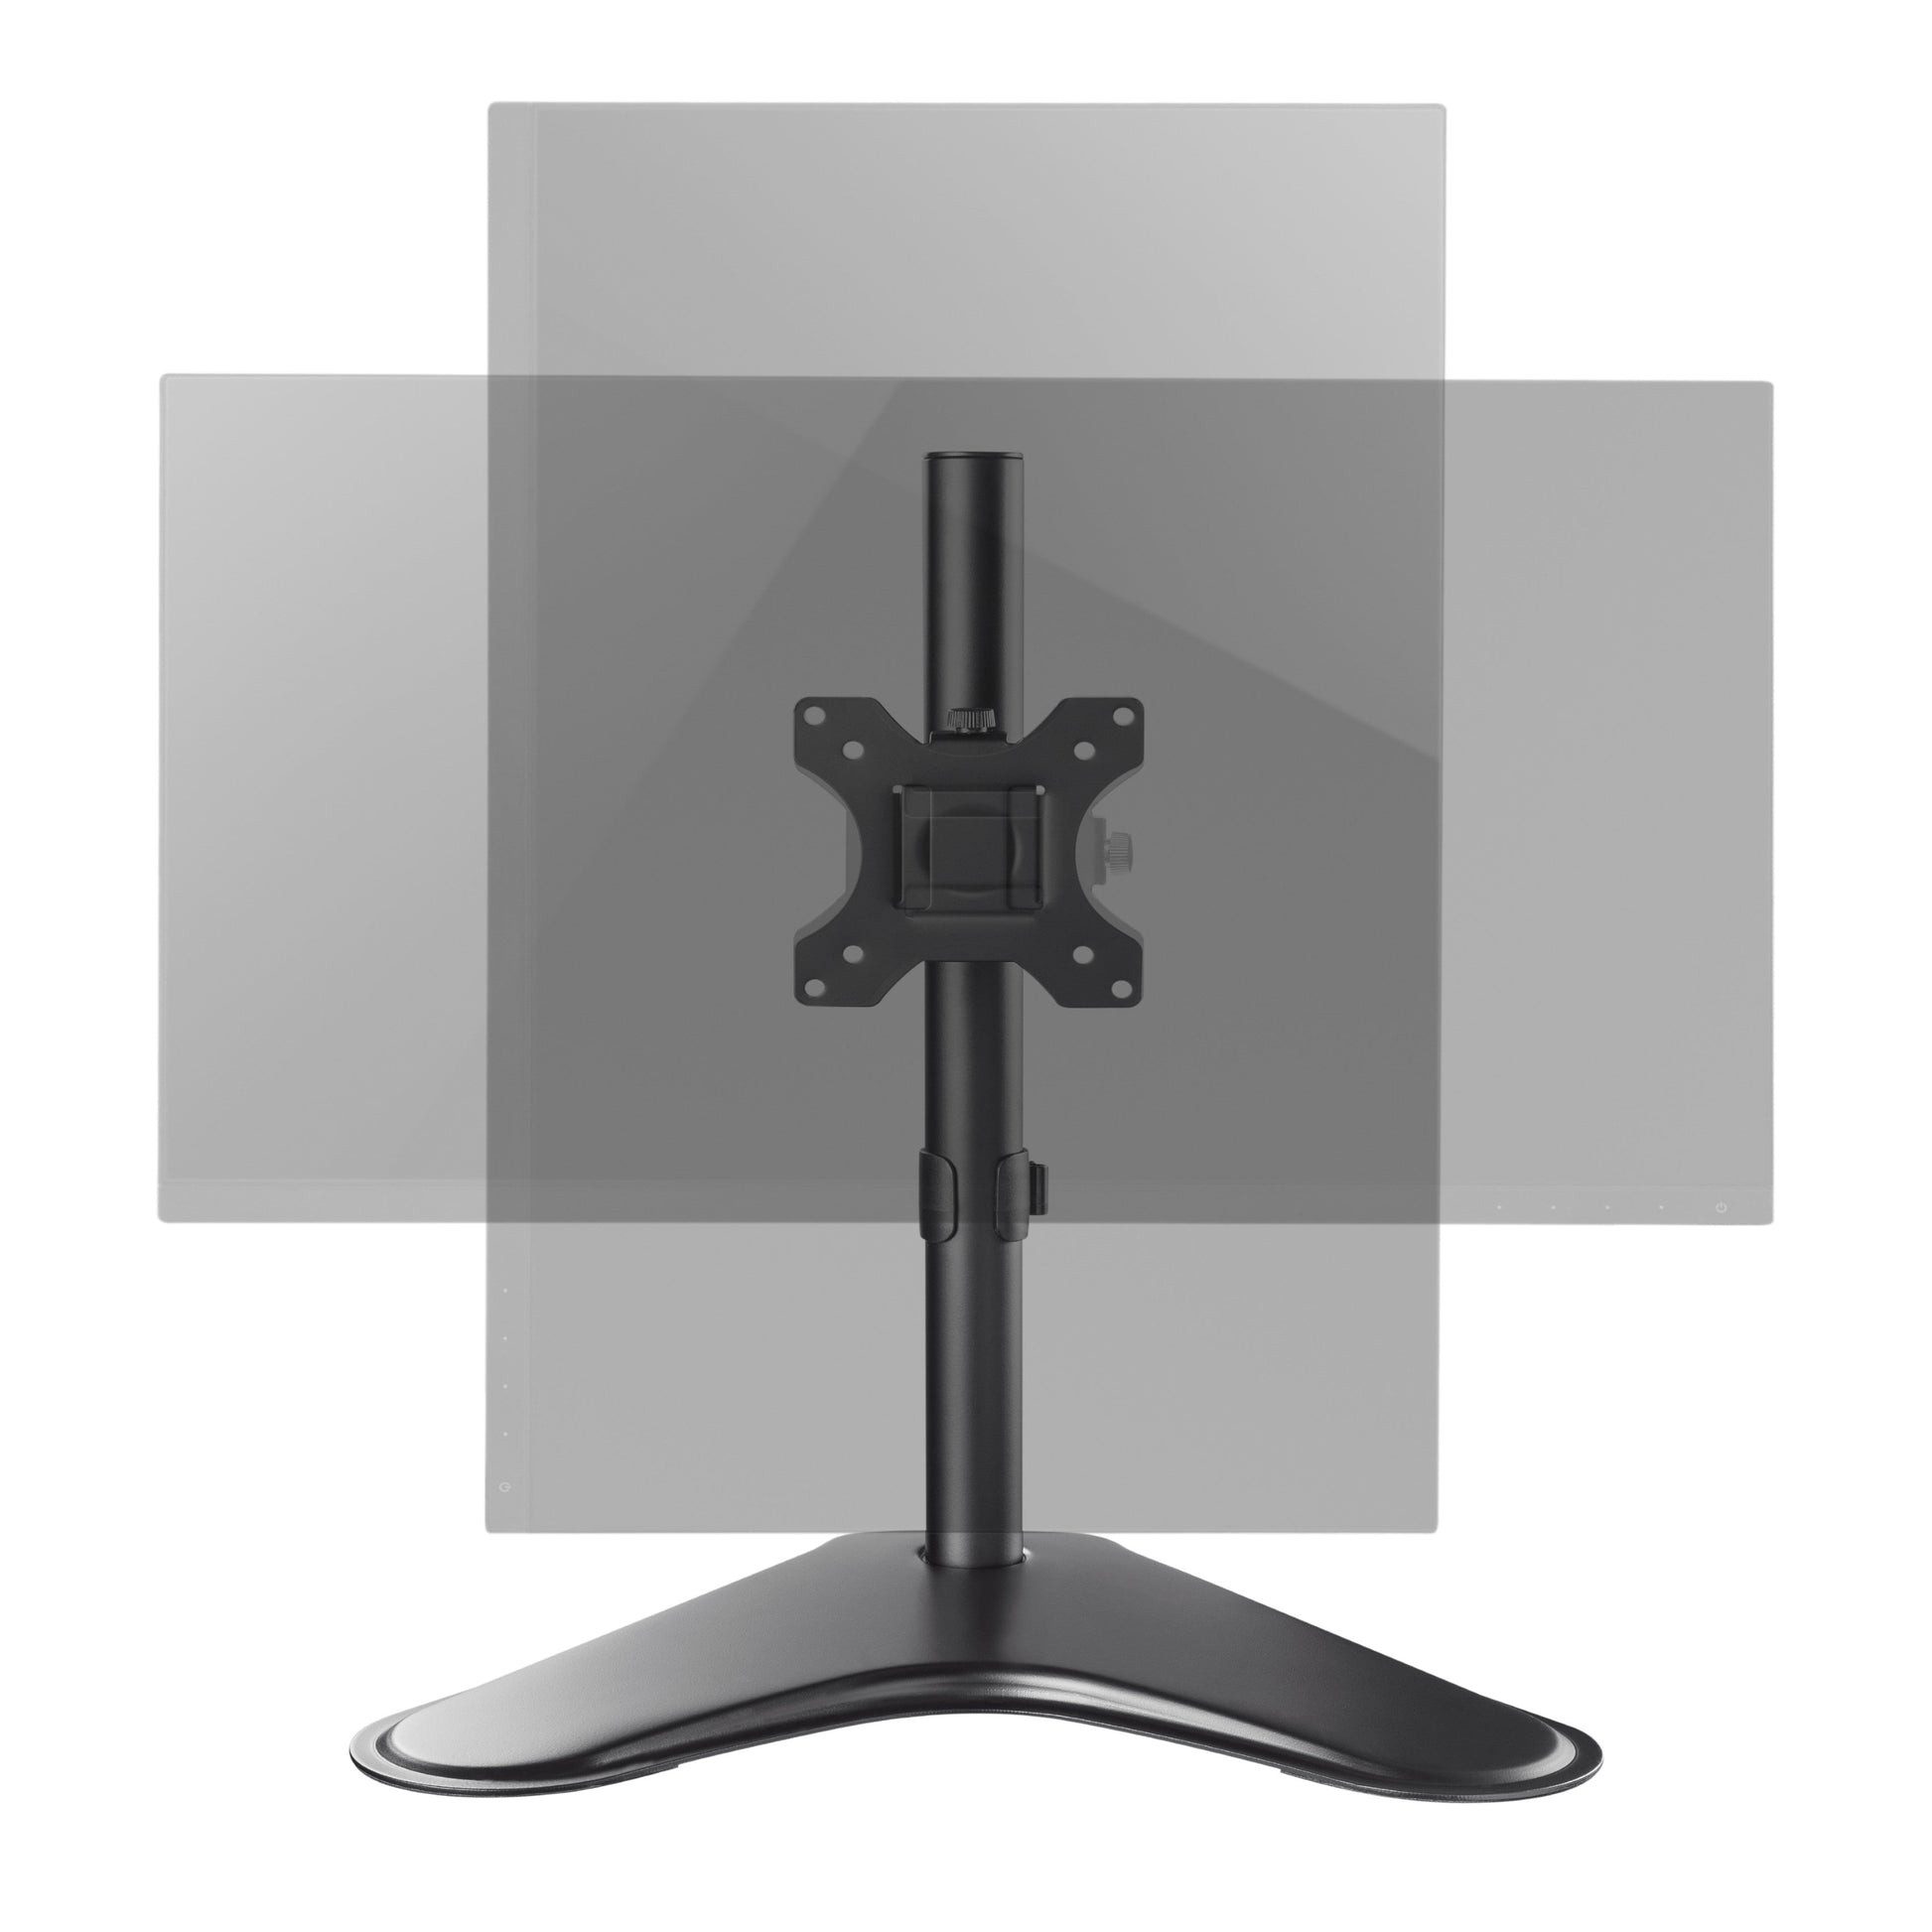 ProperAV 17"- 32" Desk PC Monitor Mount with Freestanding Base (VESA Max. 100x100) - maplin.co.uk